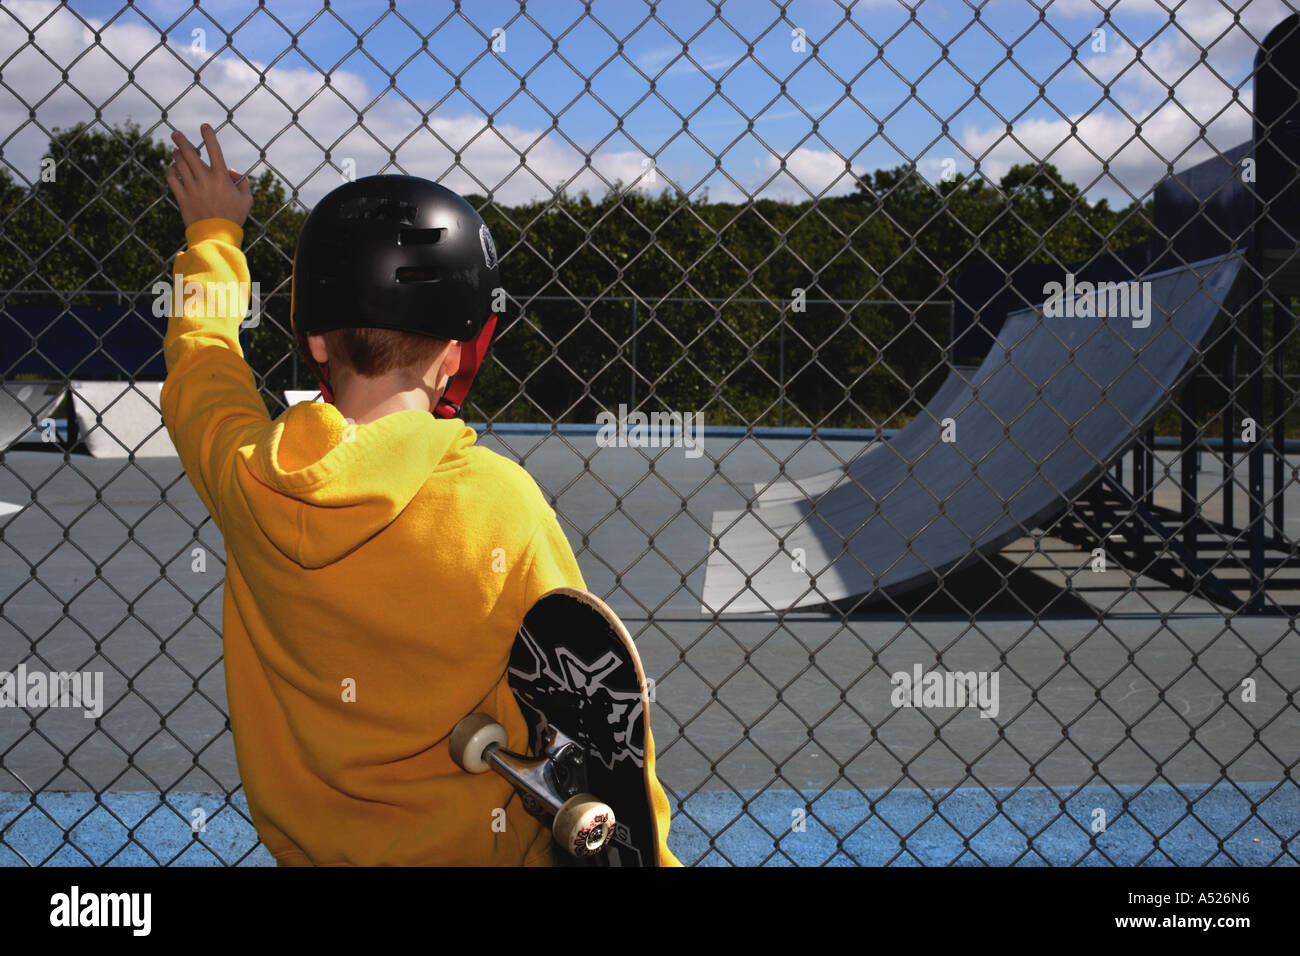 Child Contemplating Skateboard Ramp Stock Photo